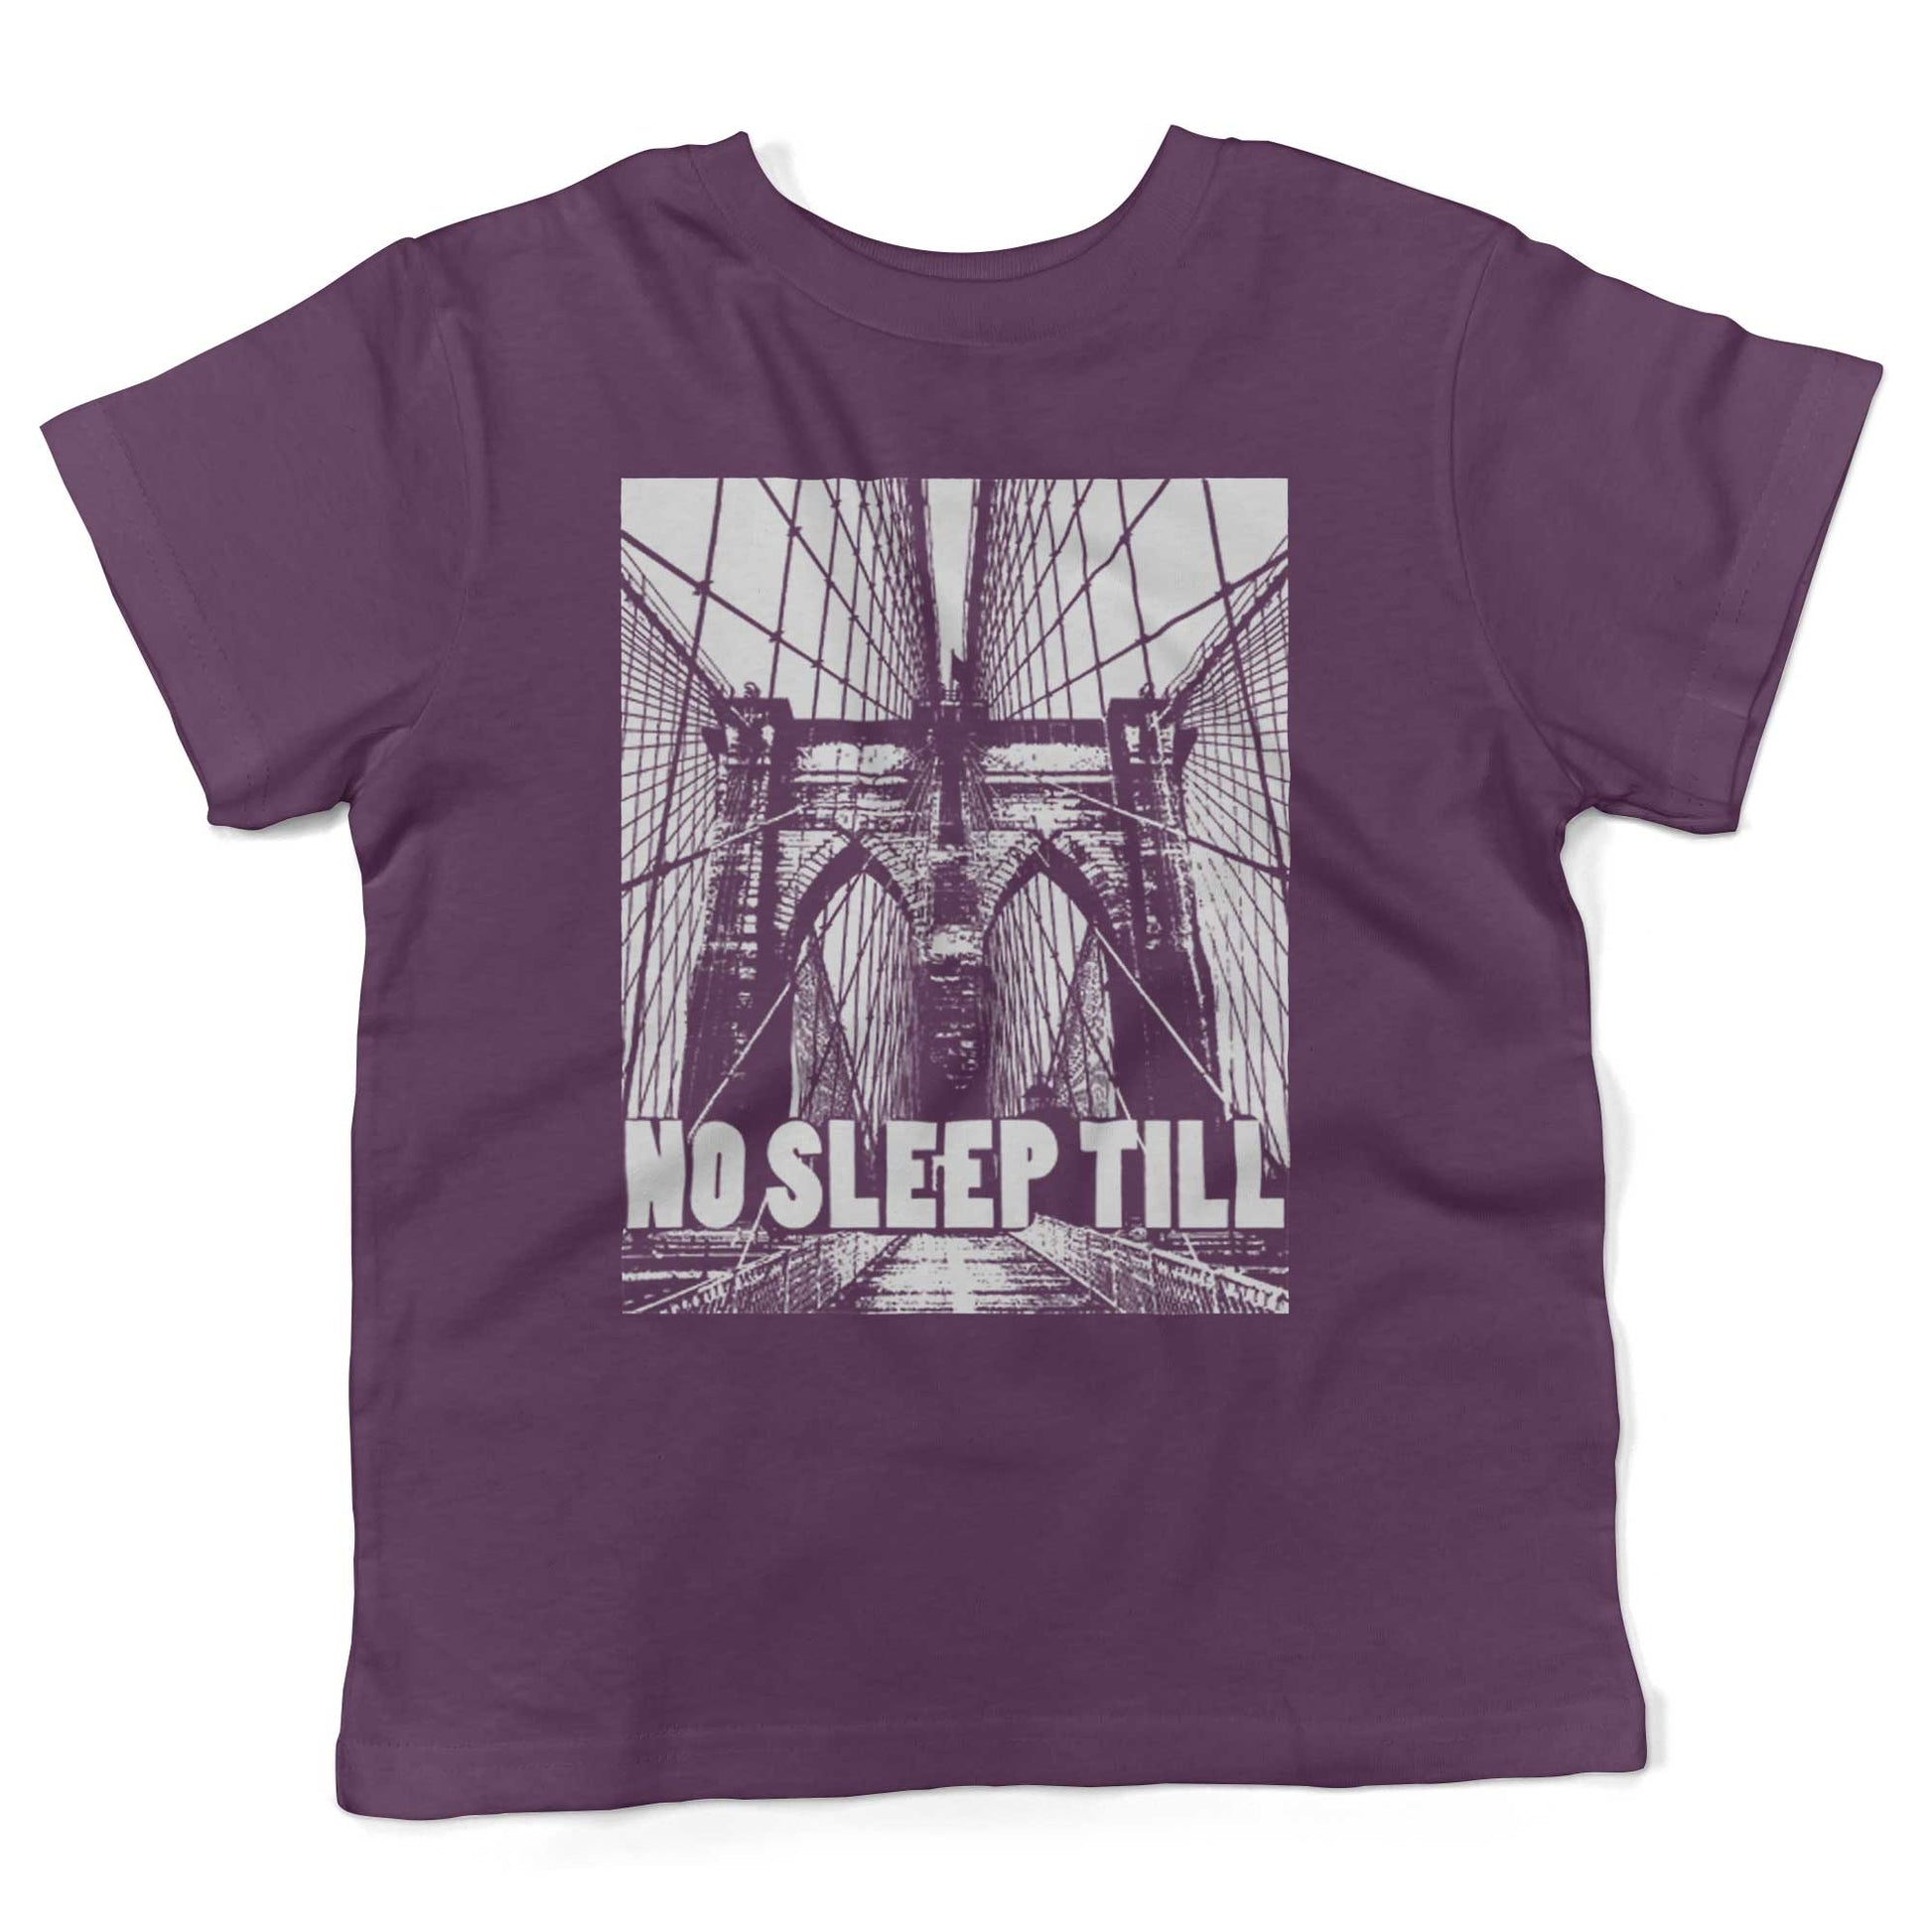 No Sleep Till Brooklyn Toddler Shirt-Organic Purple-2T